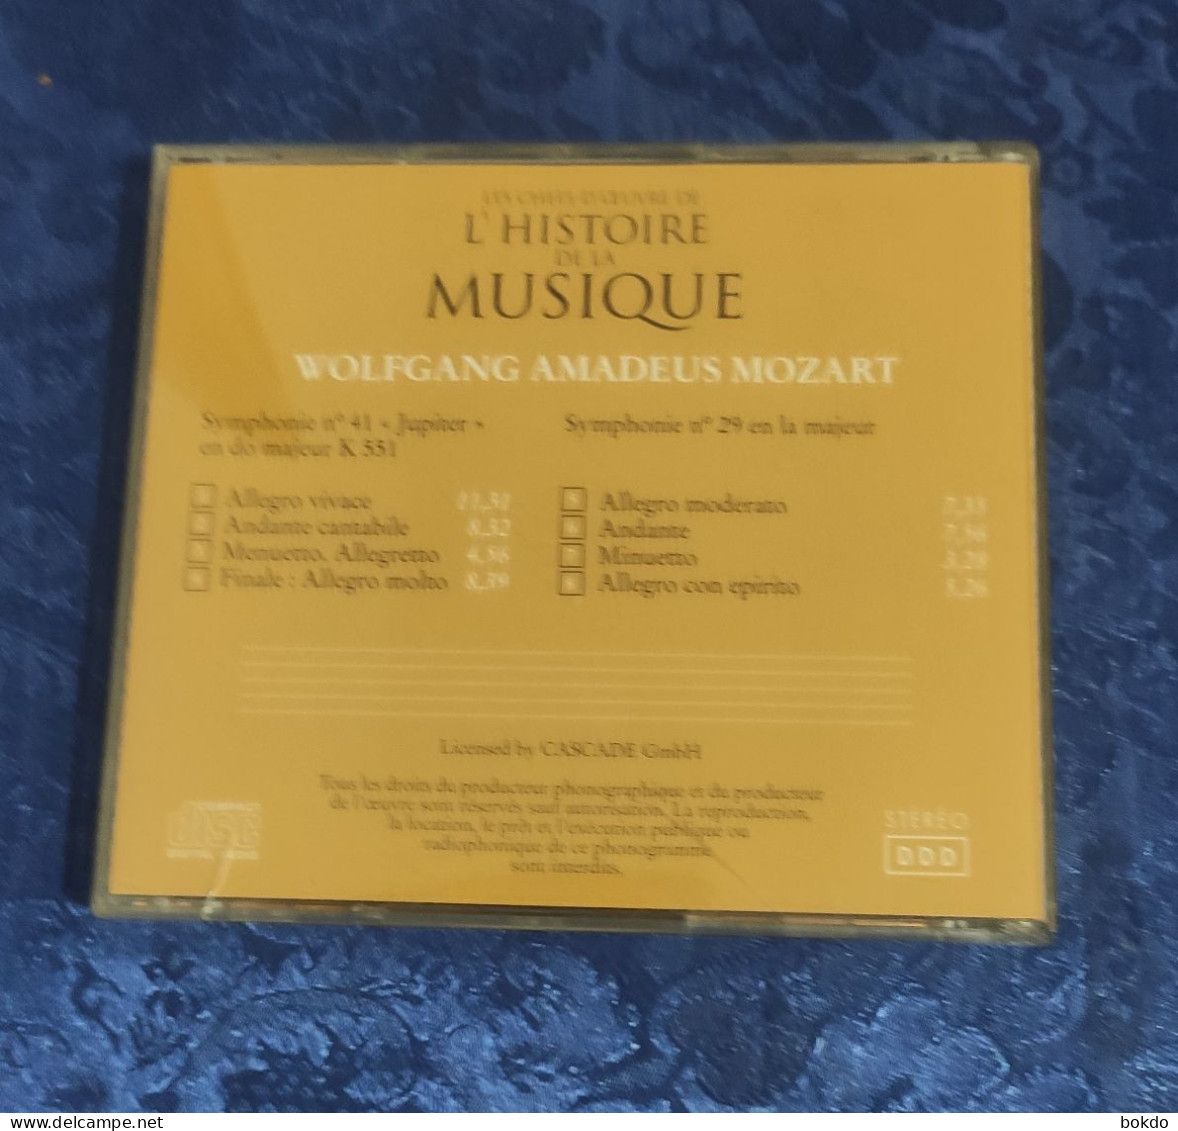 Mozart - Symphonie N° 41 Et N° 29 - Classical